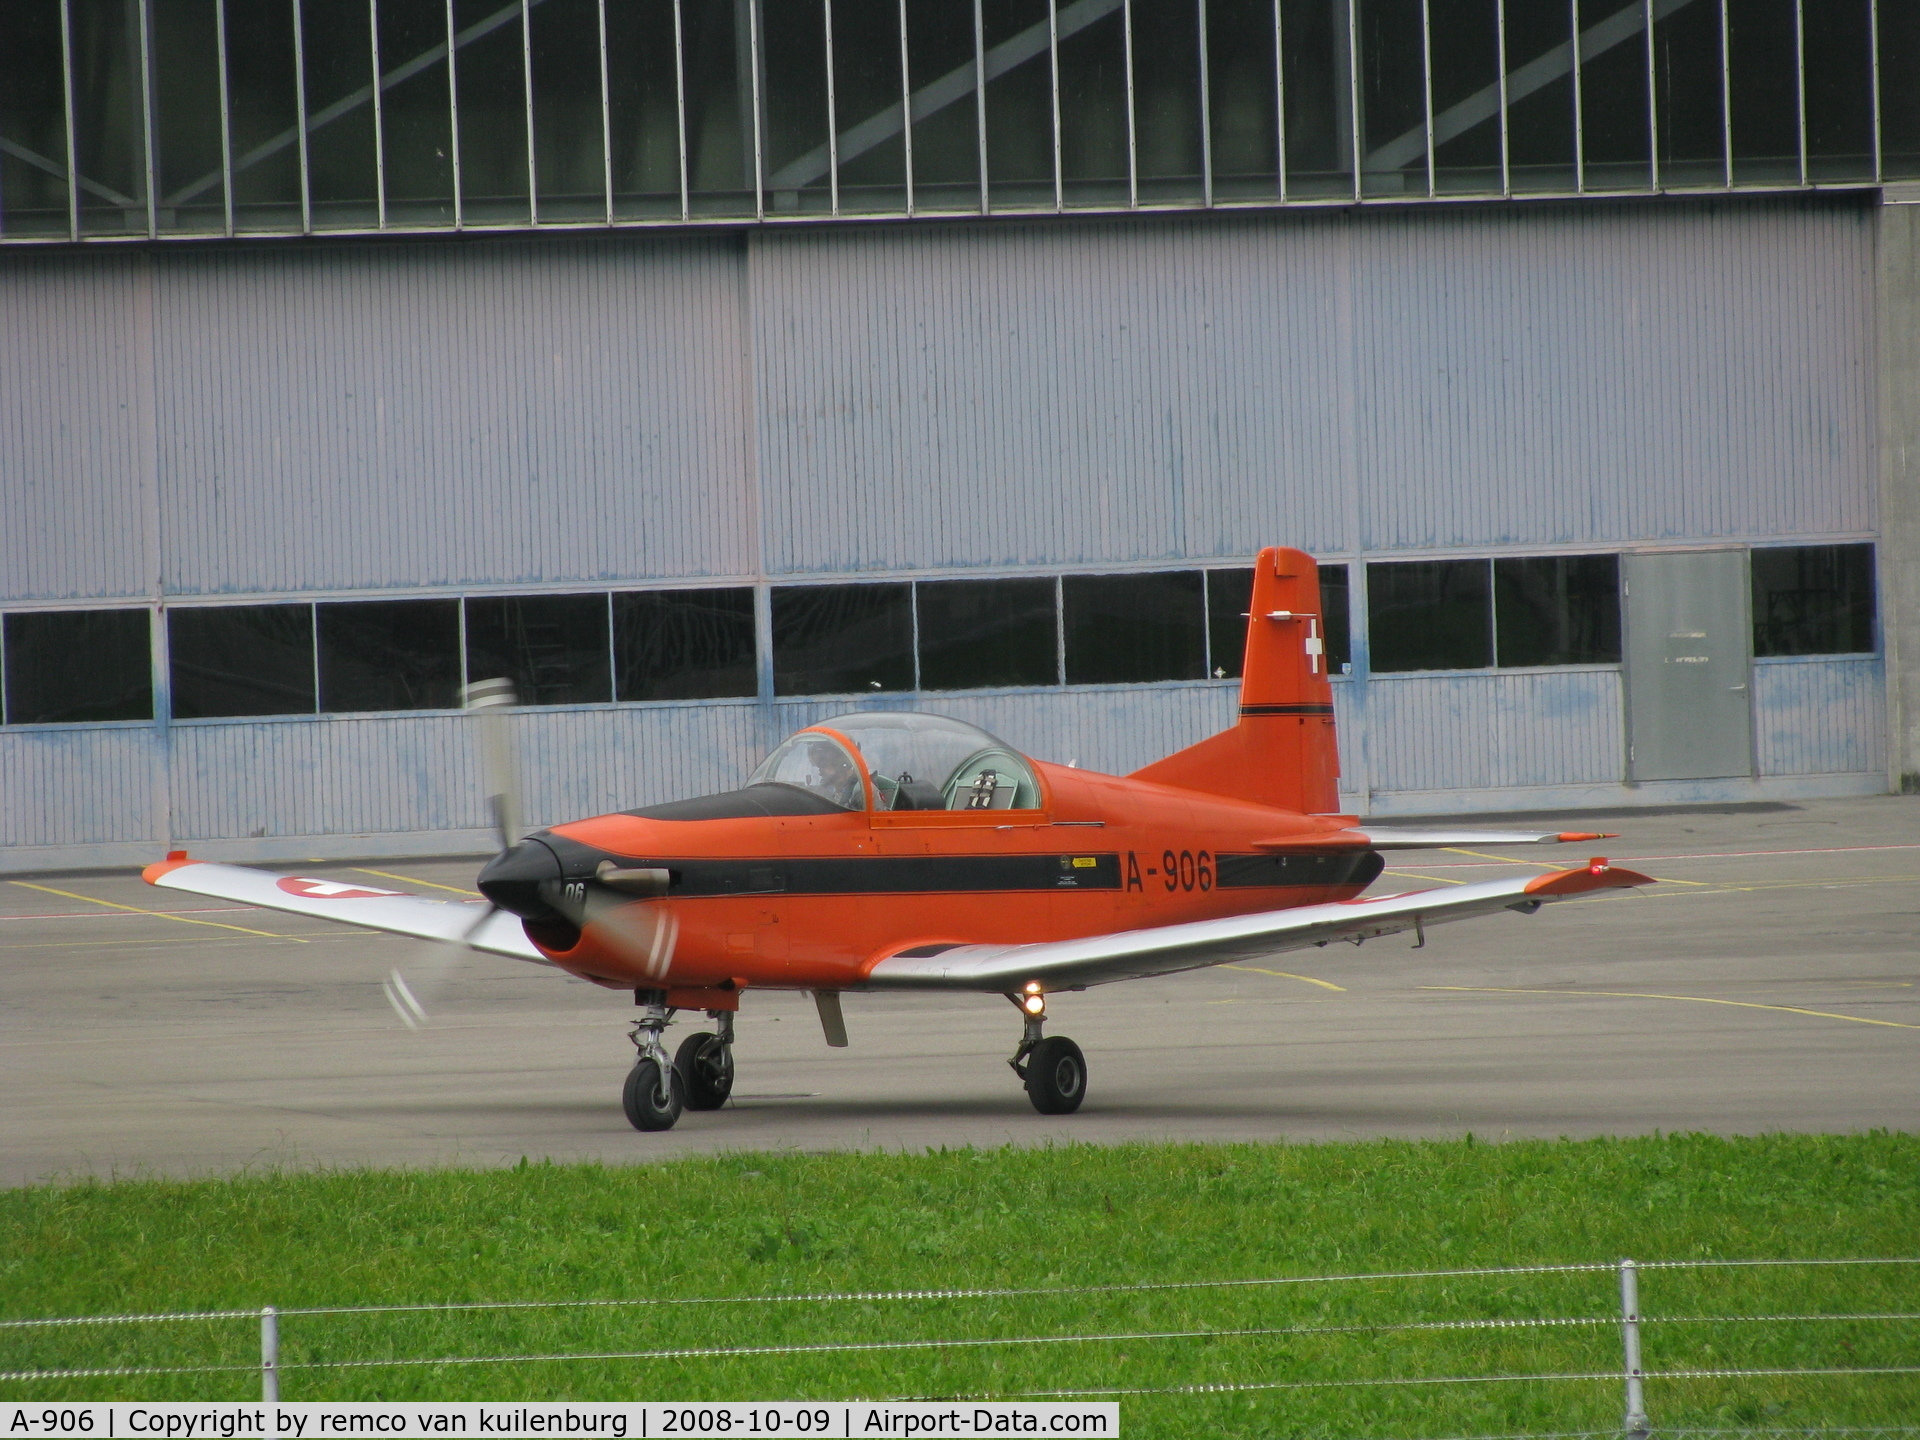 A-906, 1982 Pilatus PC-7 Turbo Trainer C/N 314, visit Alpnach